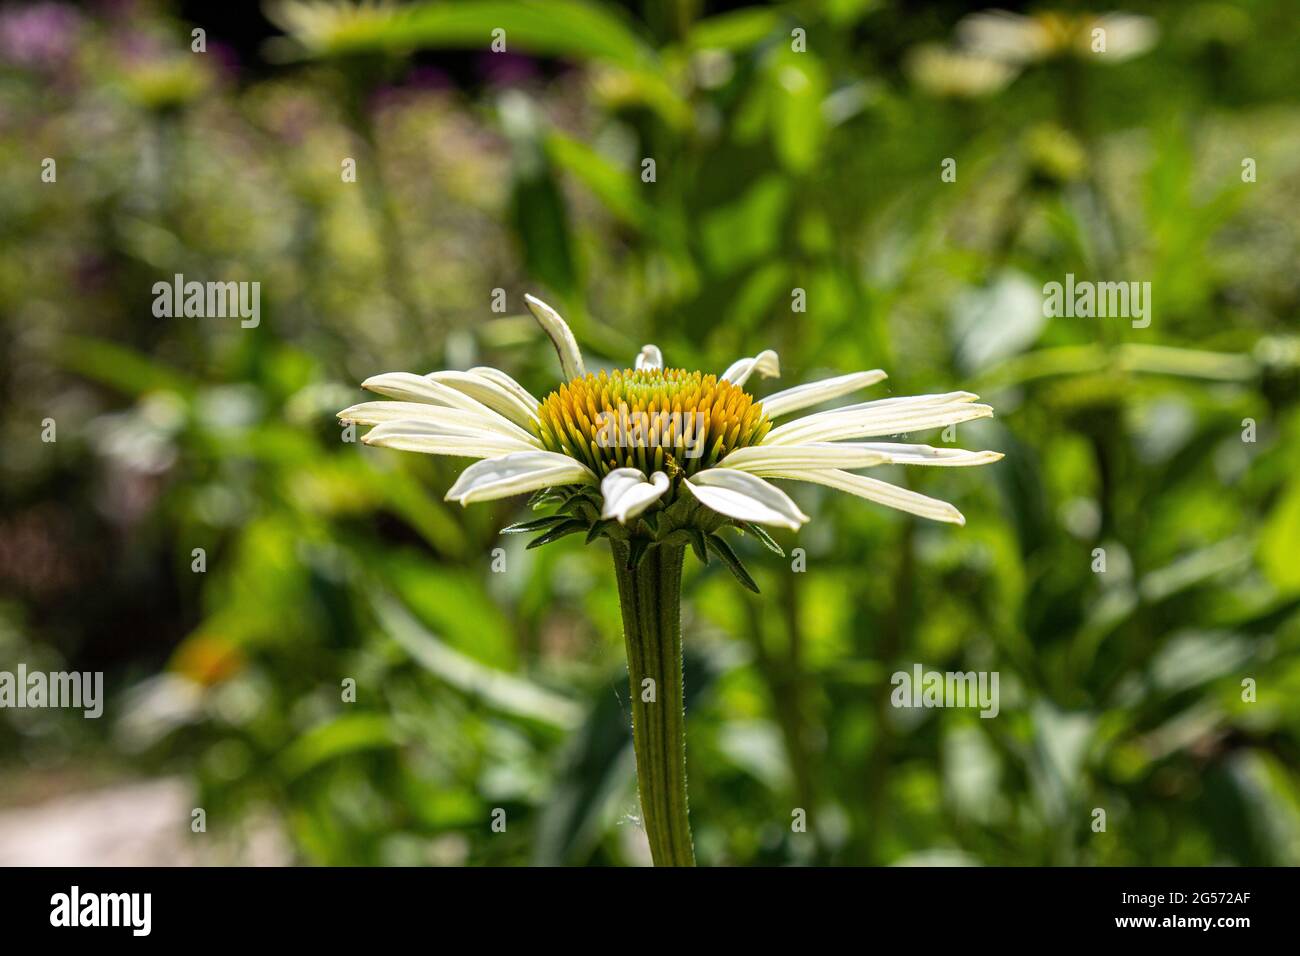 Big daisy. Garden daisy. White yellow flower. Stock Photo